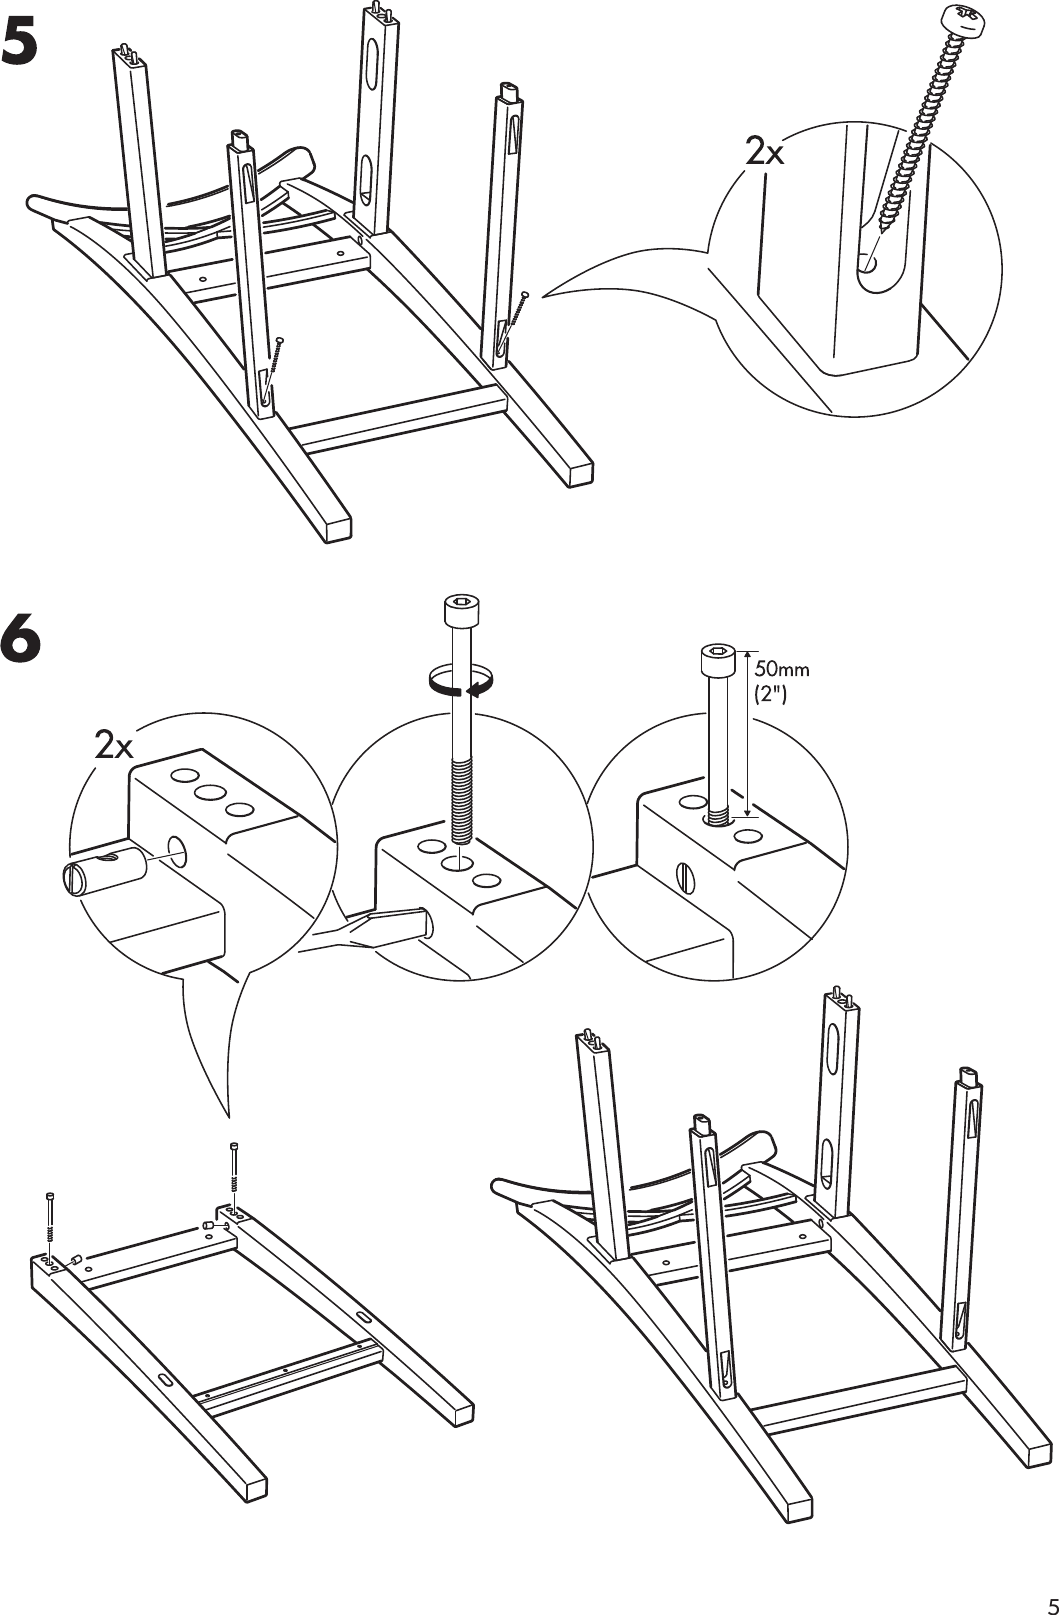 Page 5 of 8 - Ikea Ikea-Ingolf-Bar-Stool-W-Backrst-29-1-8-Assembly-Instruction